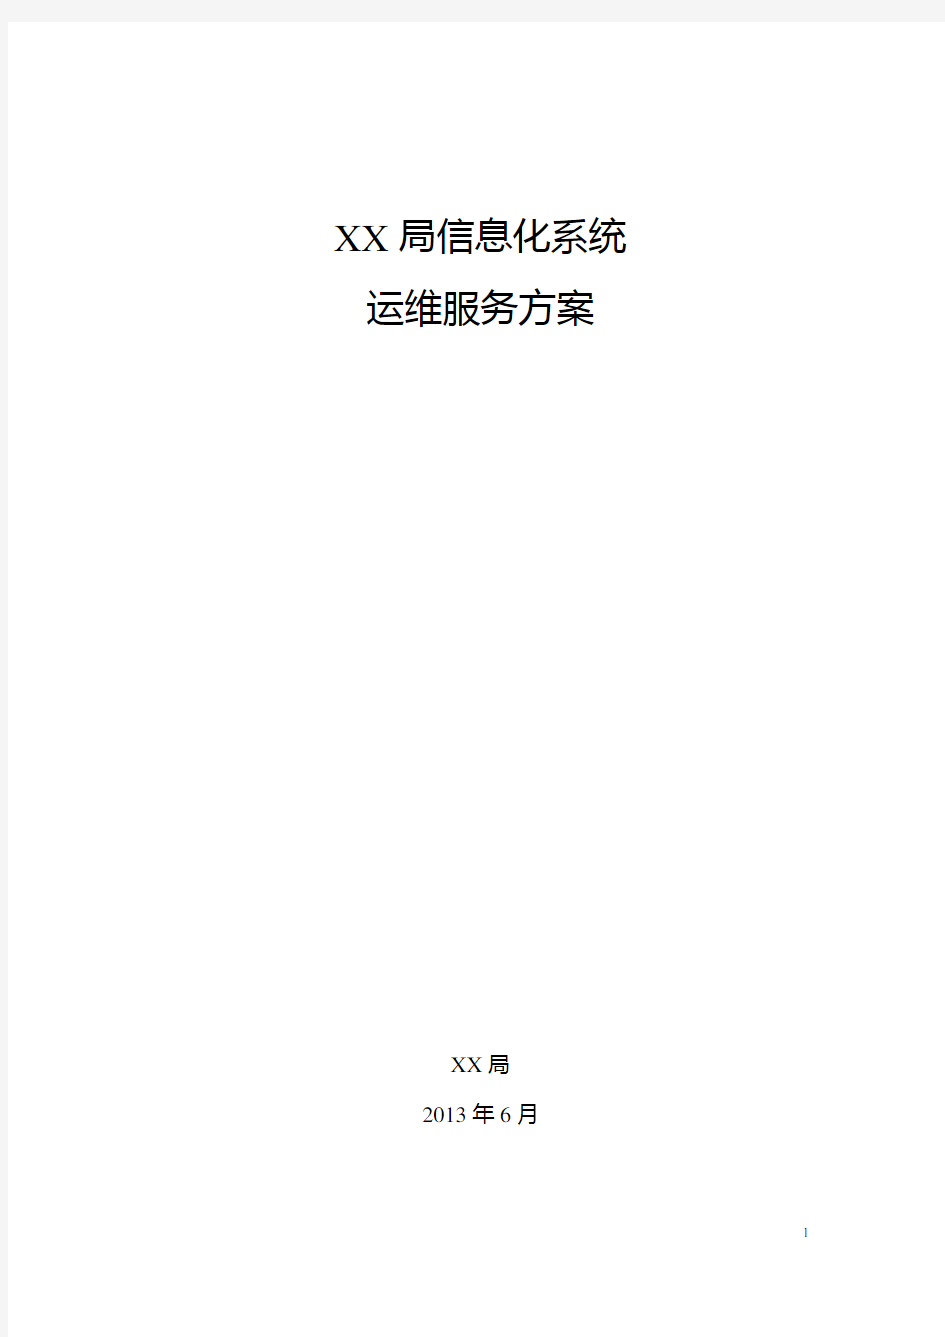 xxxx信息系统运维服务方案